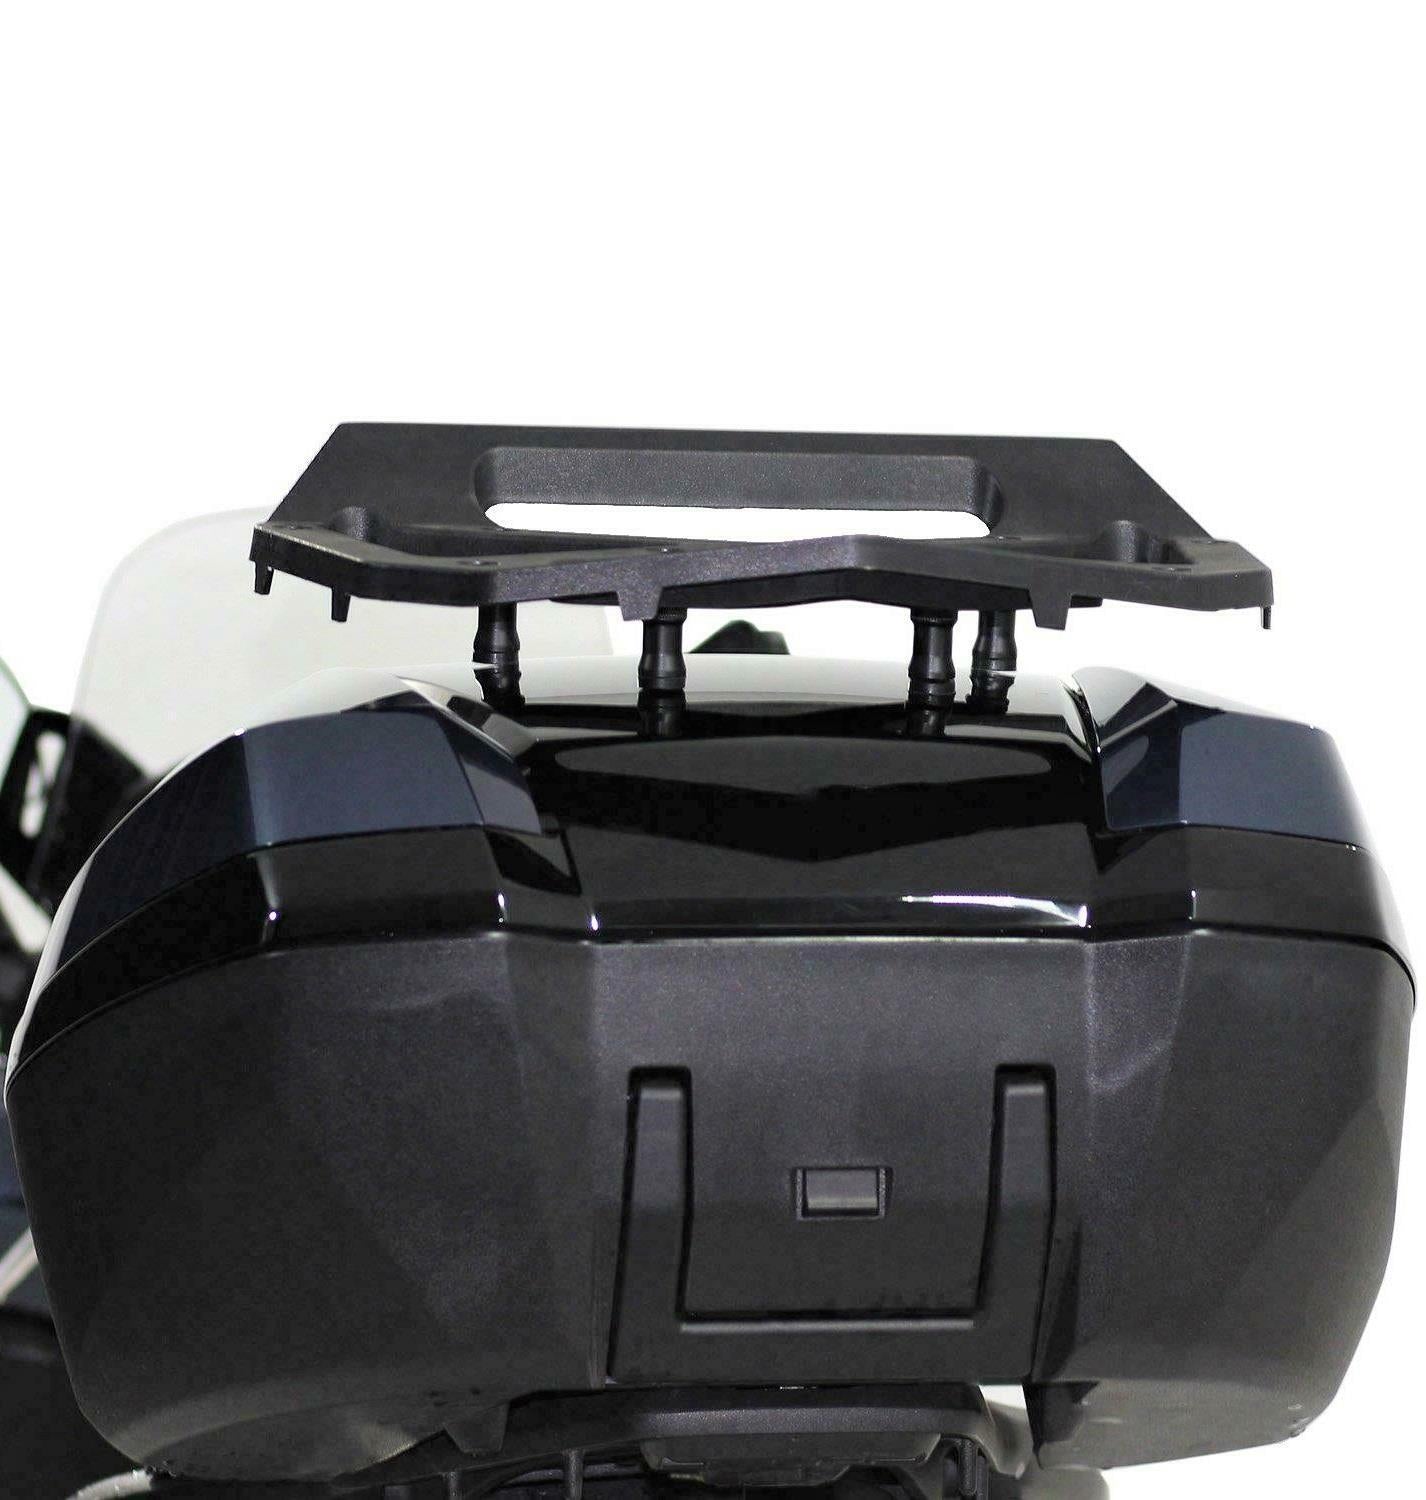 Universal Sturdy Nylon Rack for Top Case Luggage Extra Luggage Storage Shelf Grid